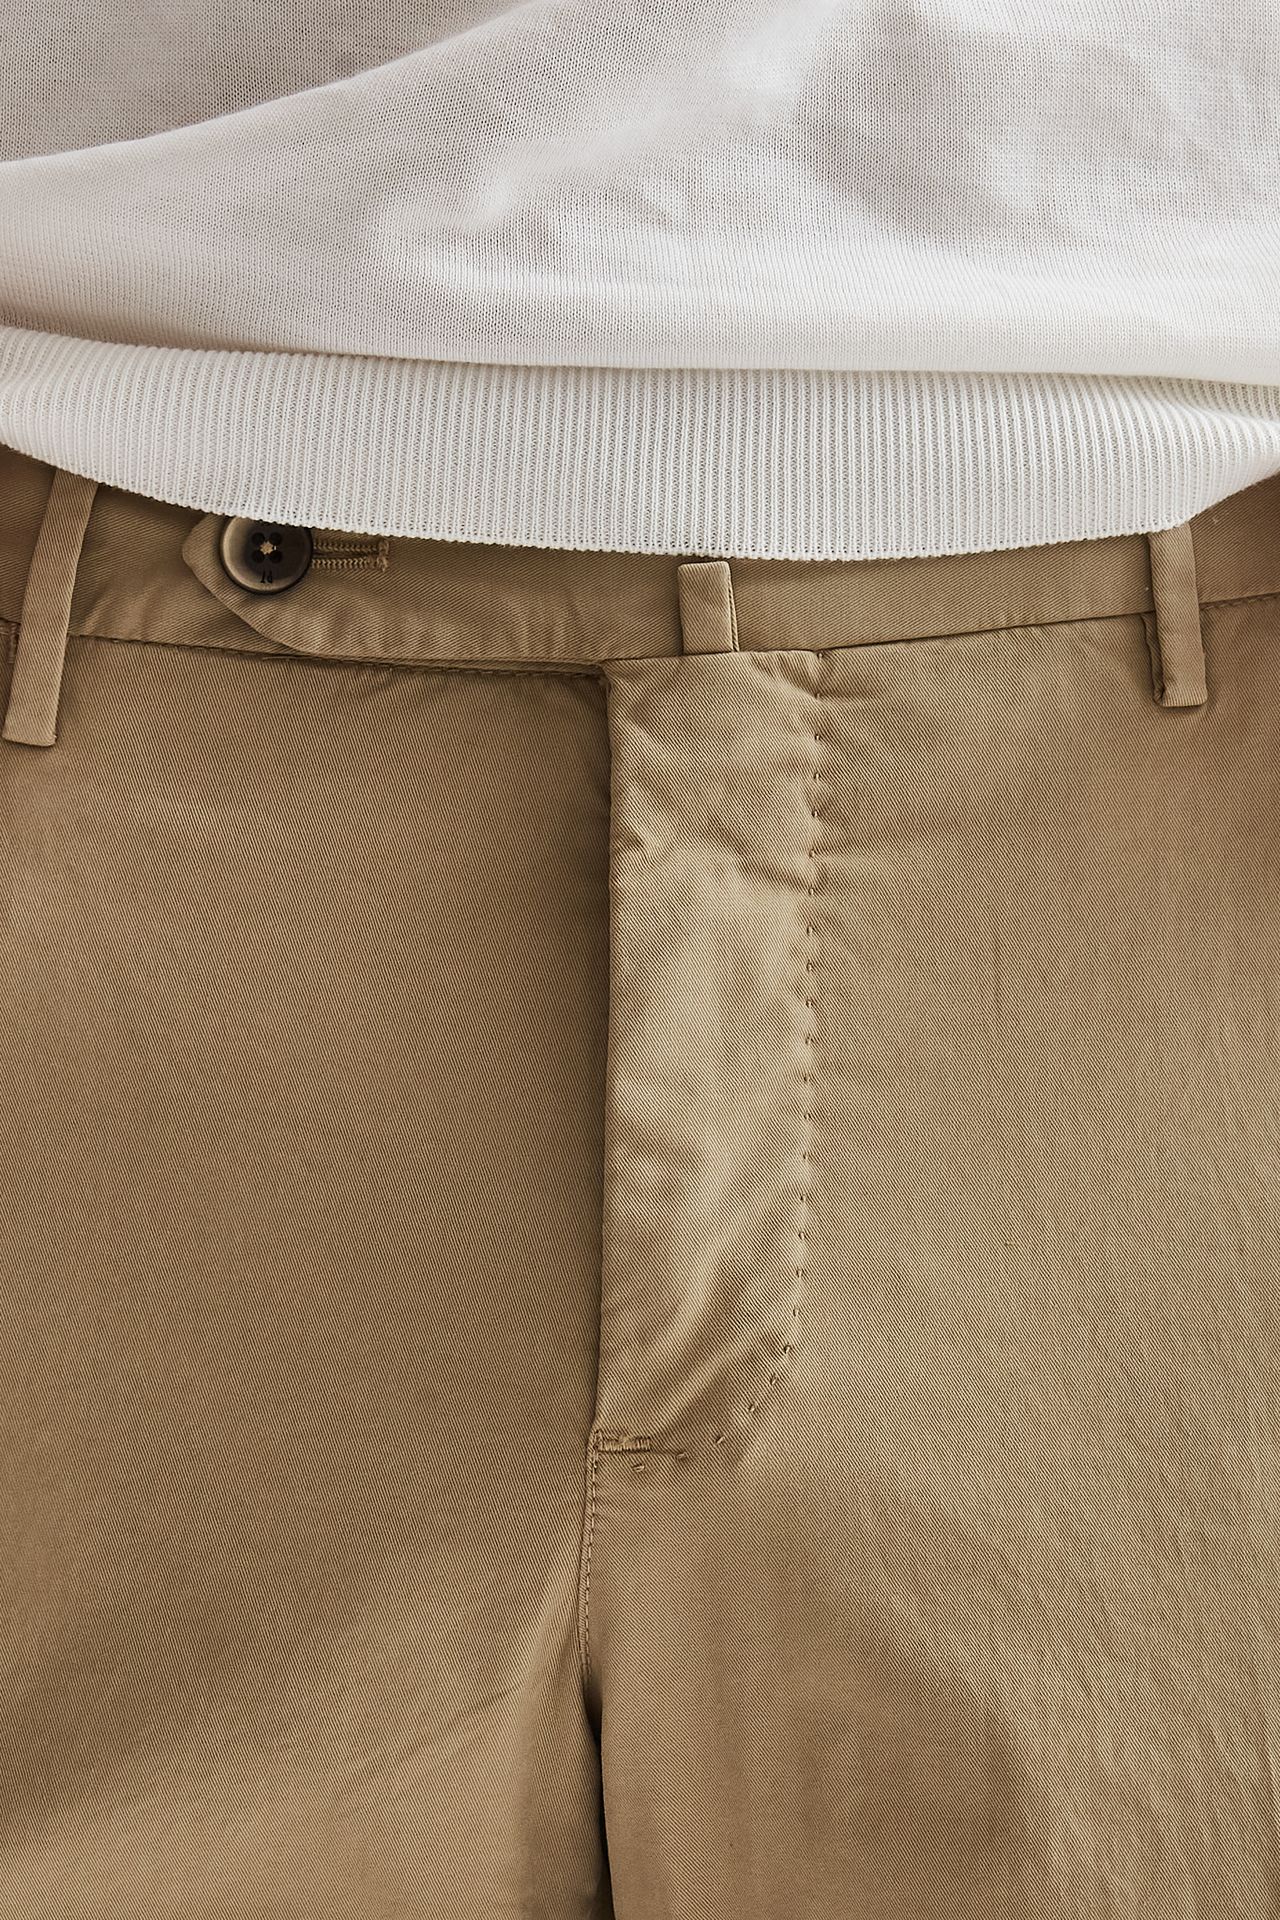 Pantalone SLIM FIT beige